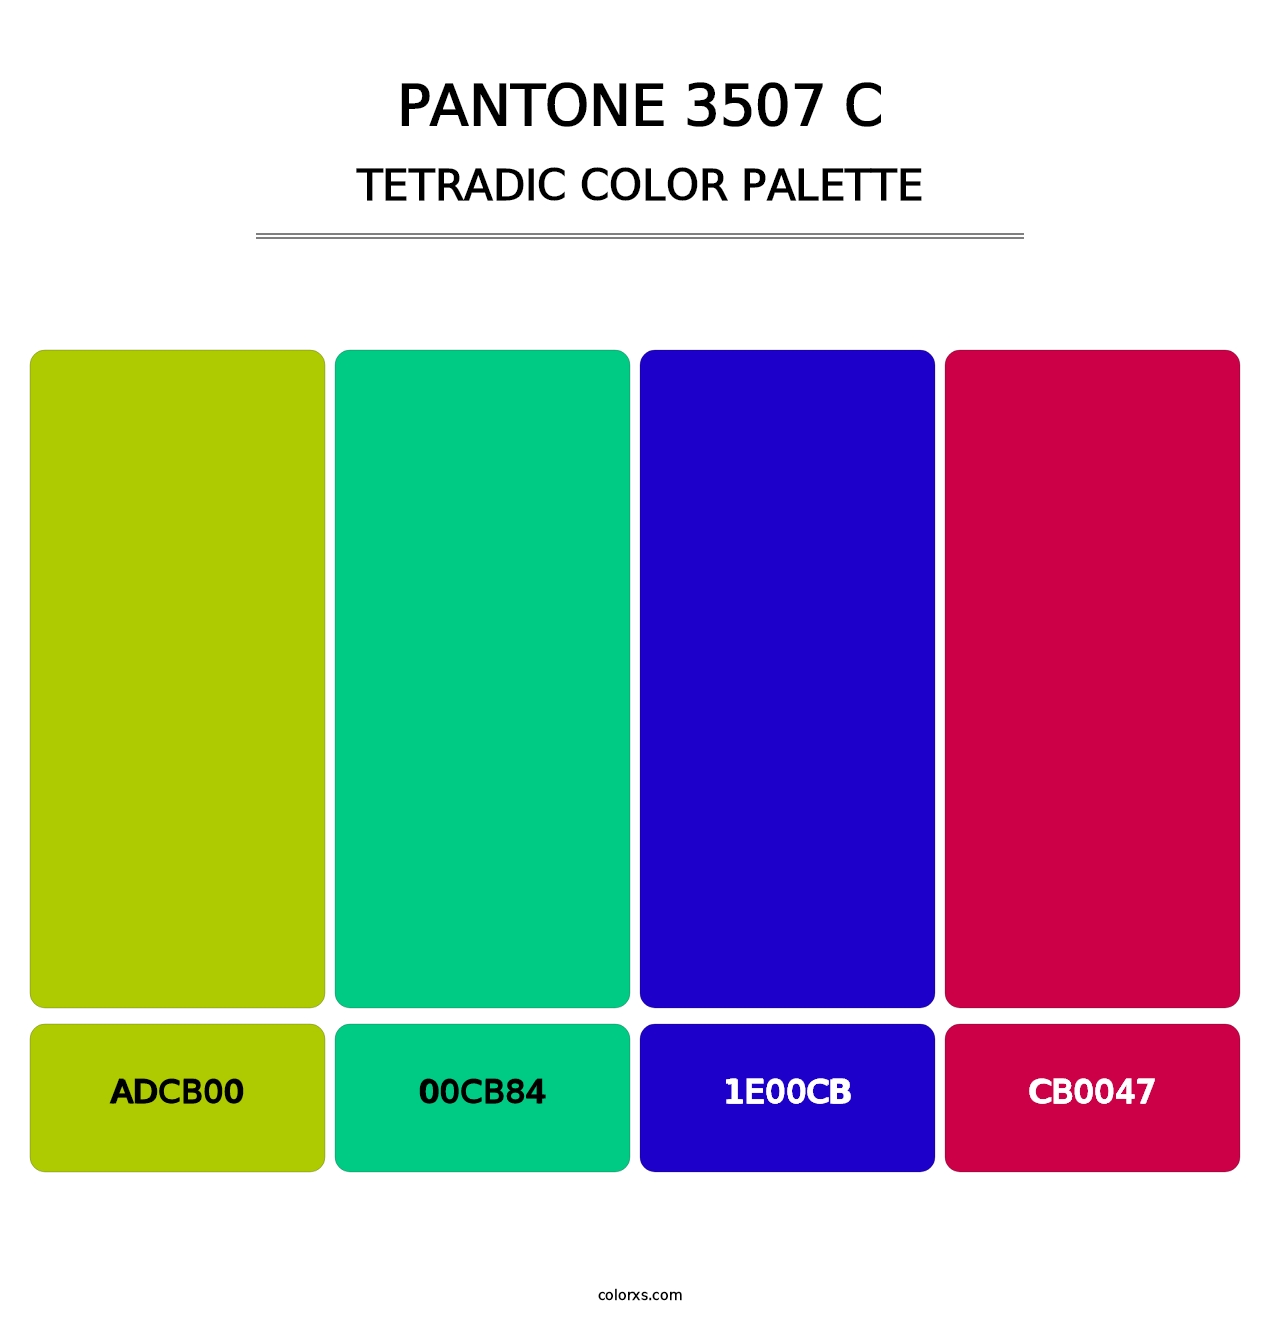 PANTONE 3507 C - Tetradic Color Palette